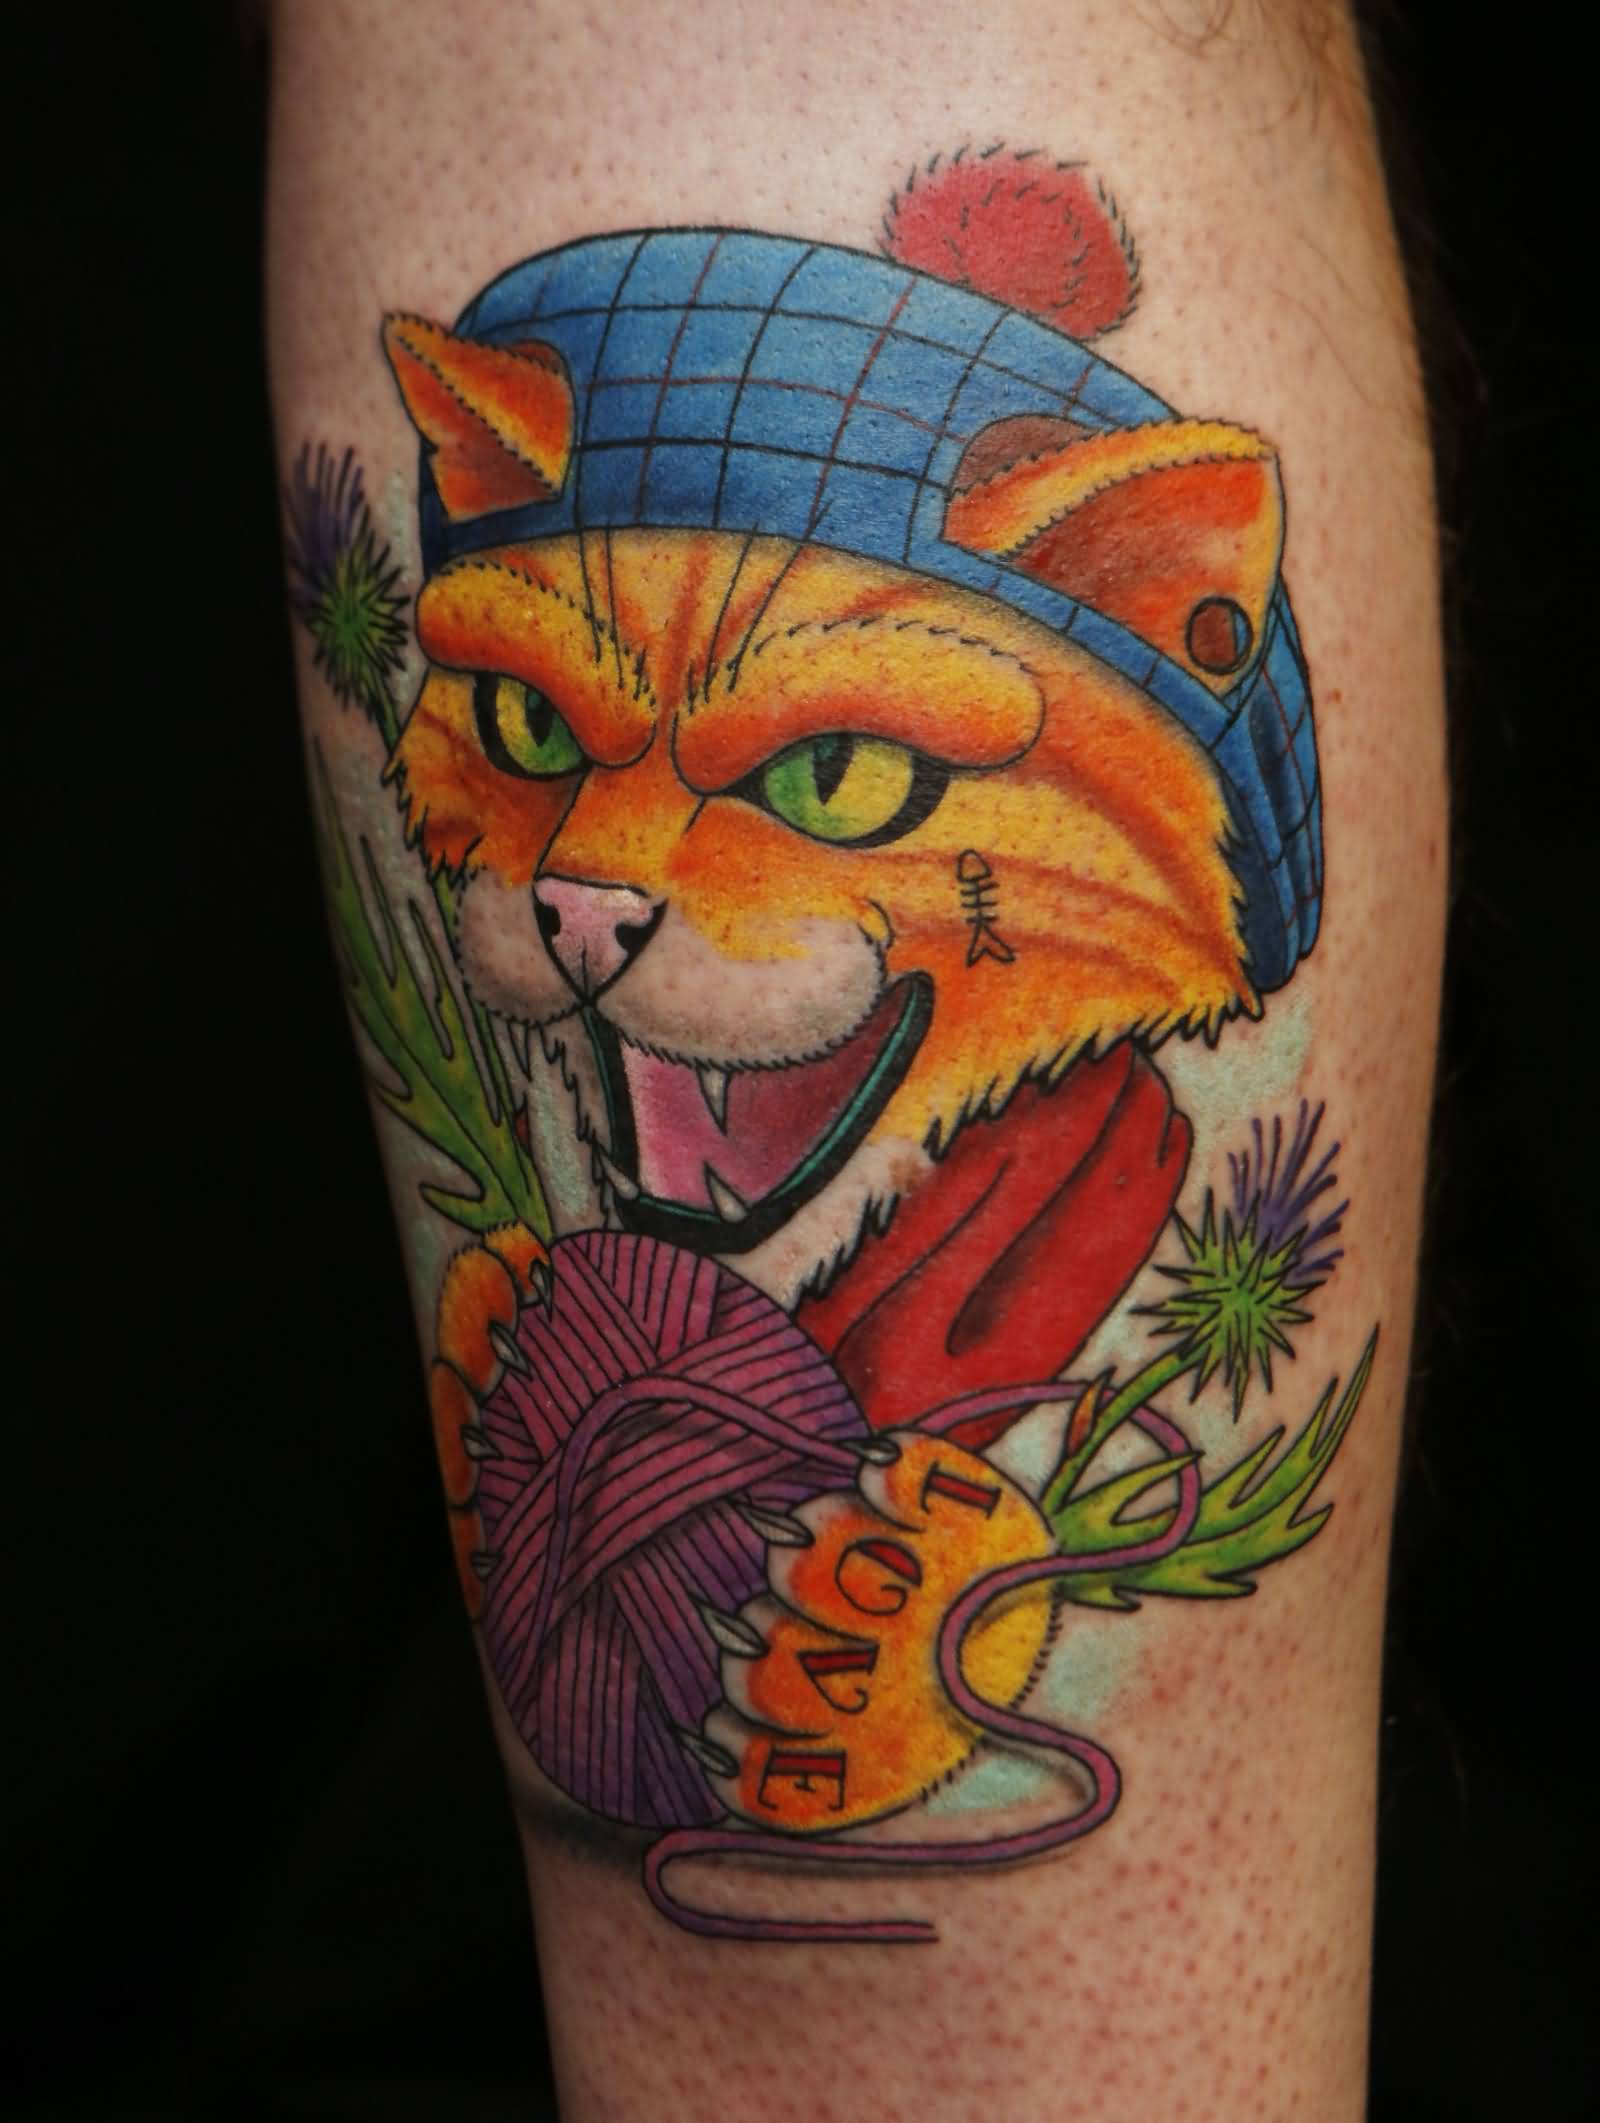 Wonderful Scottish Theme Tattoo On Arm